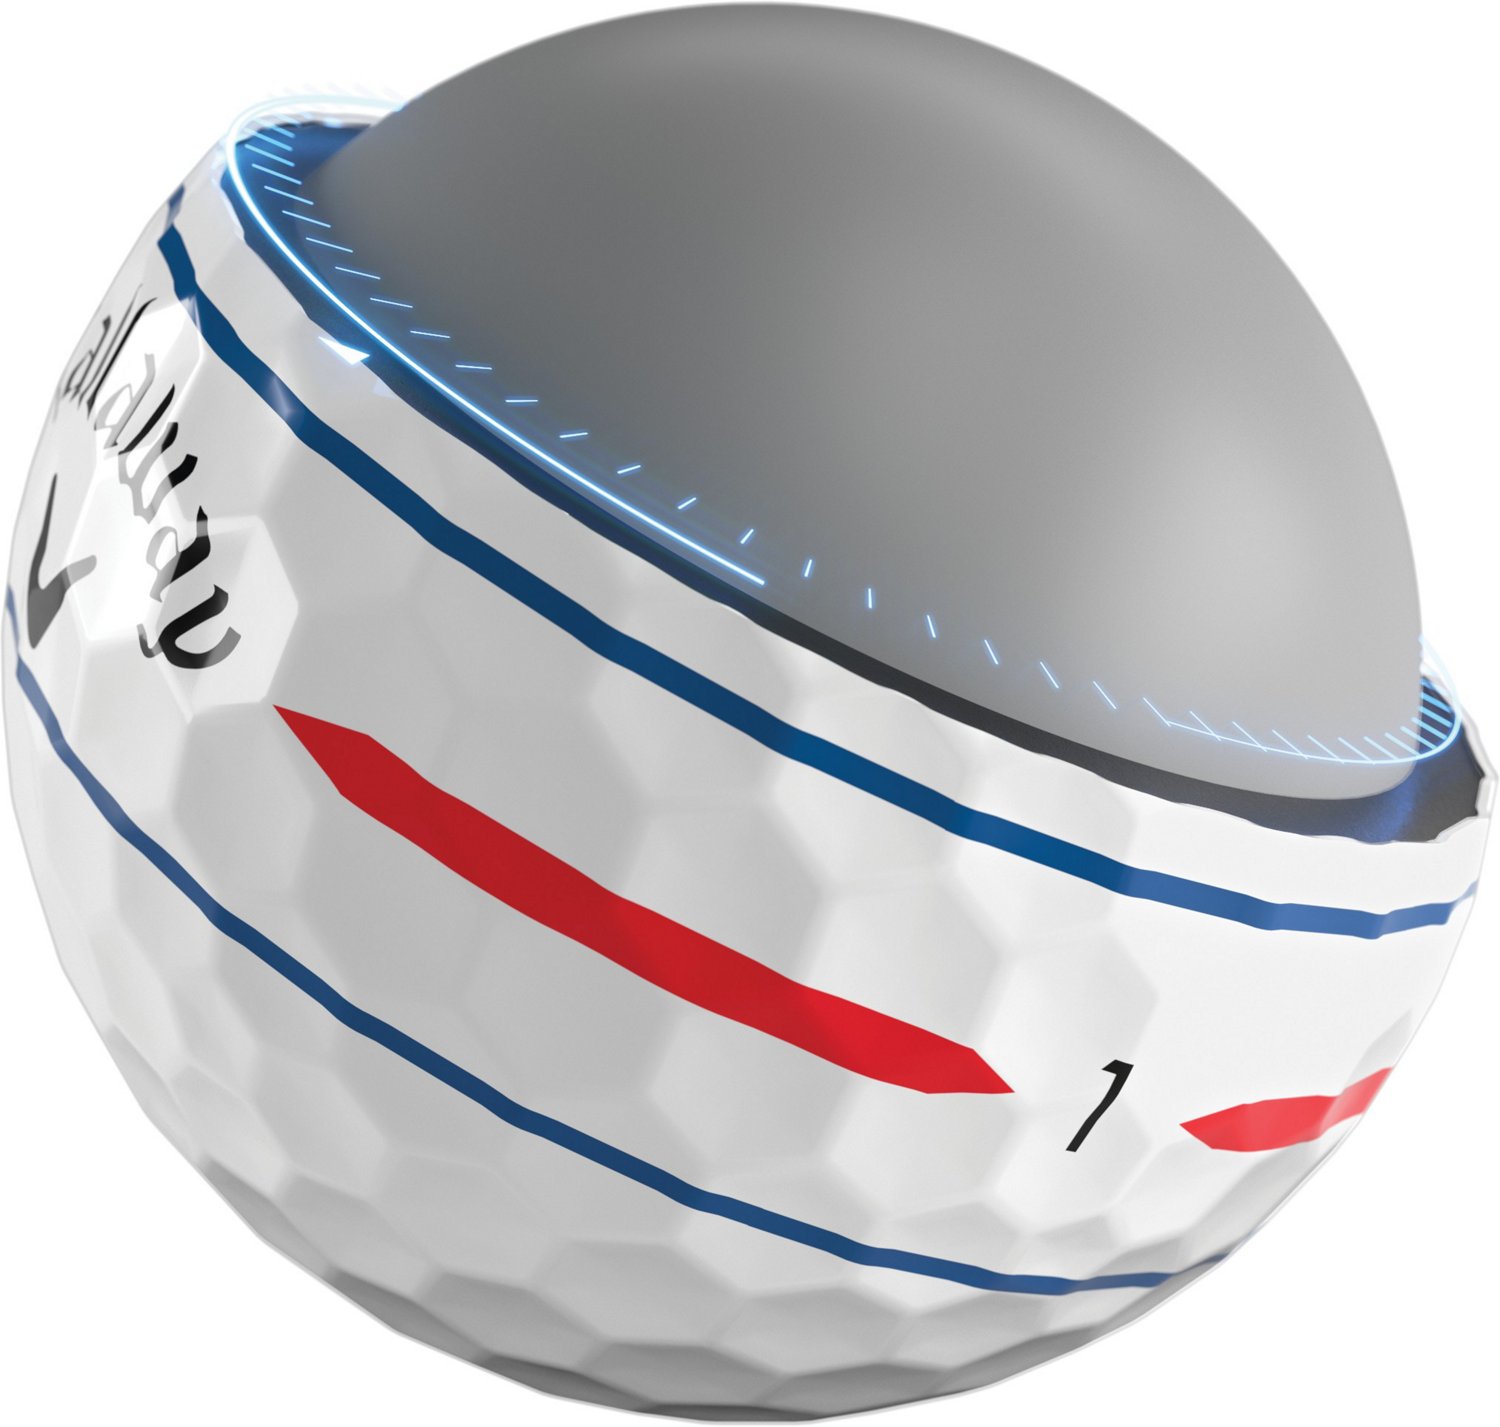 Callaway Chromesoft XLS '22 Triple Track 360 Golf Balls 12-Pack | Academy